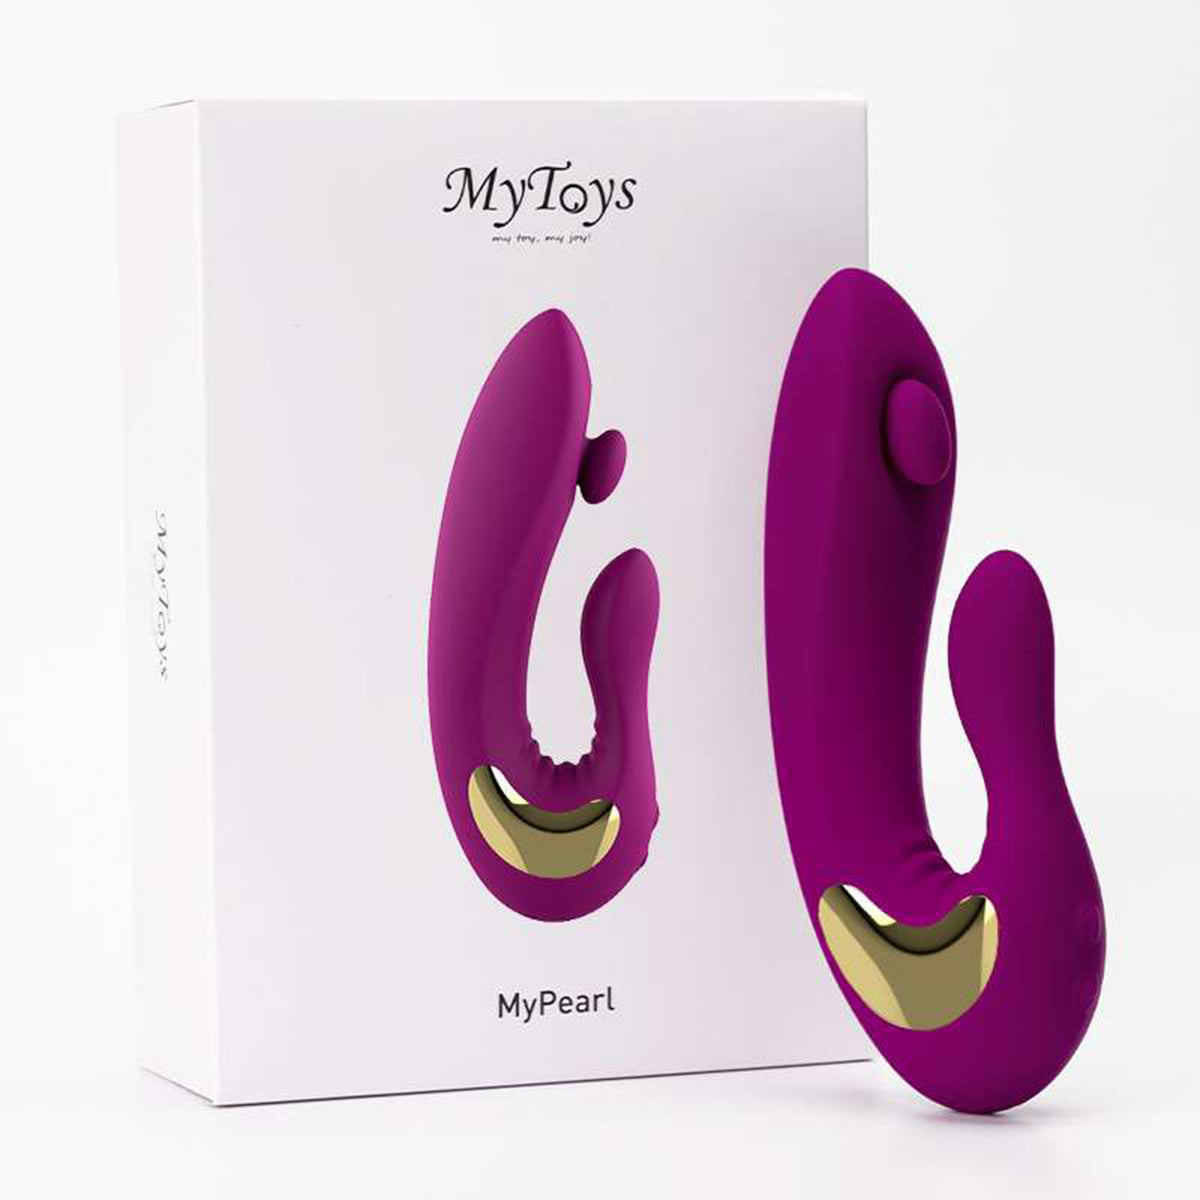 Mytoys MyPearl 雙重刺激G點按摩棒(紫紅色)